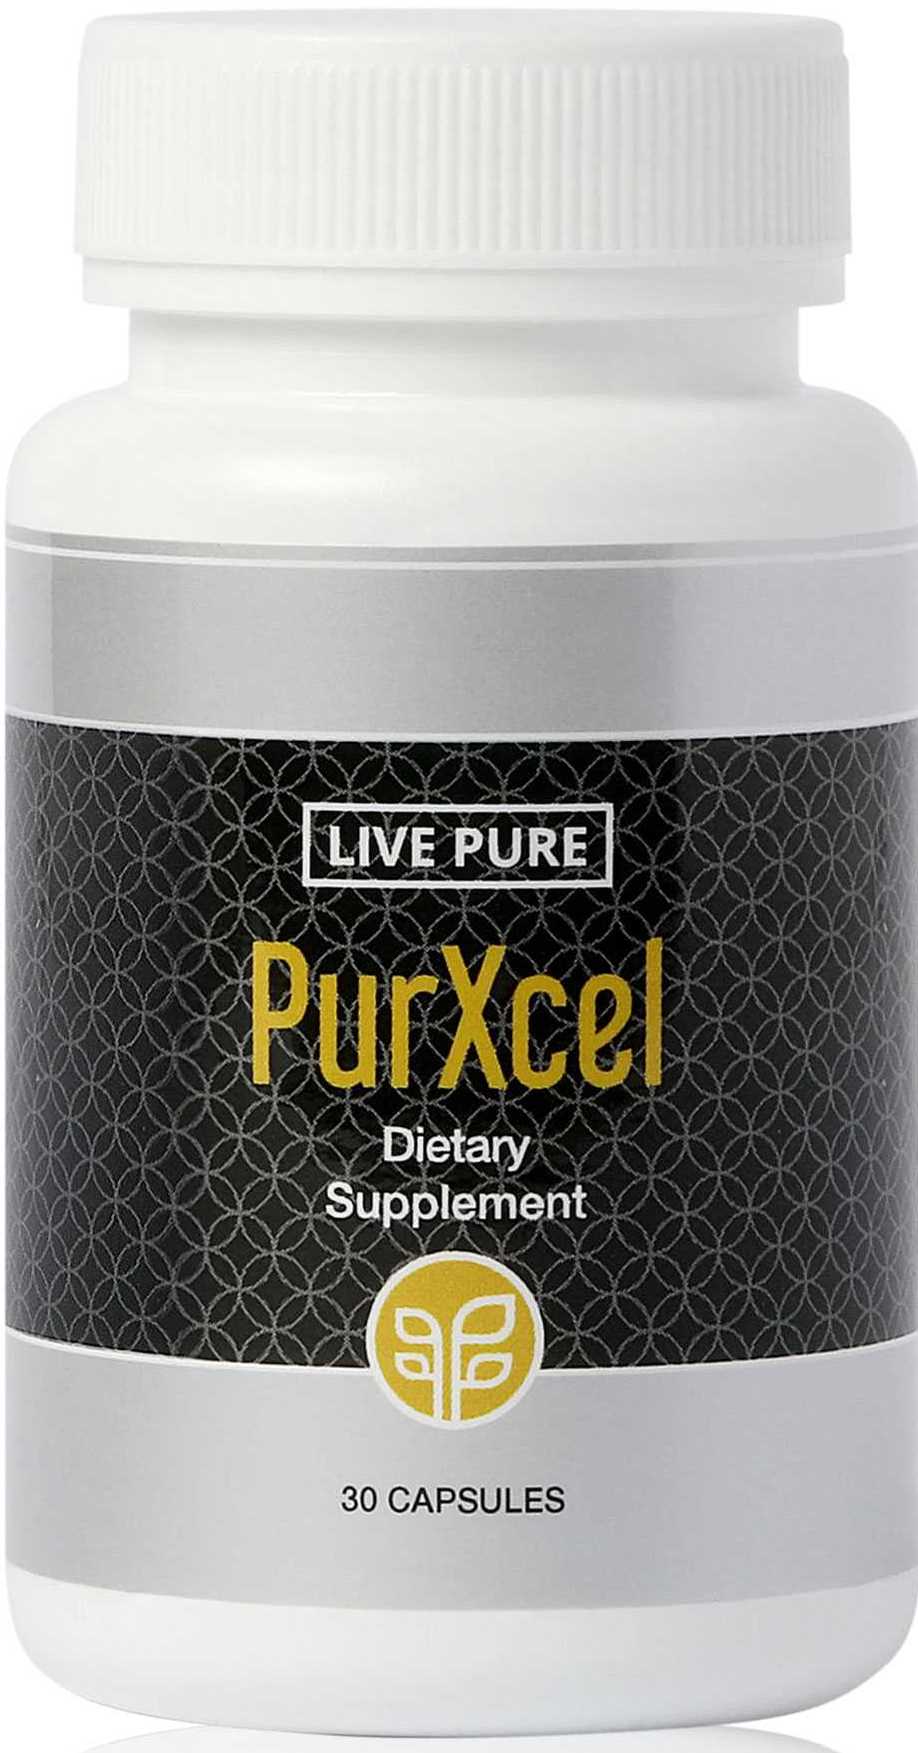 LivePure Purxcel build the body through glutathione